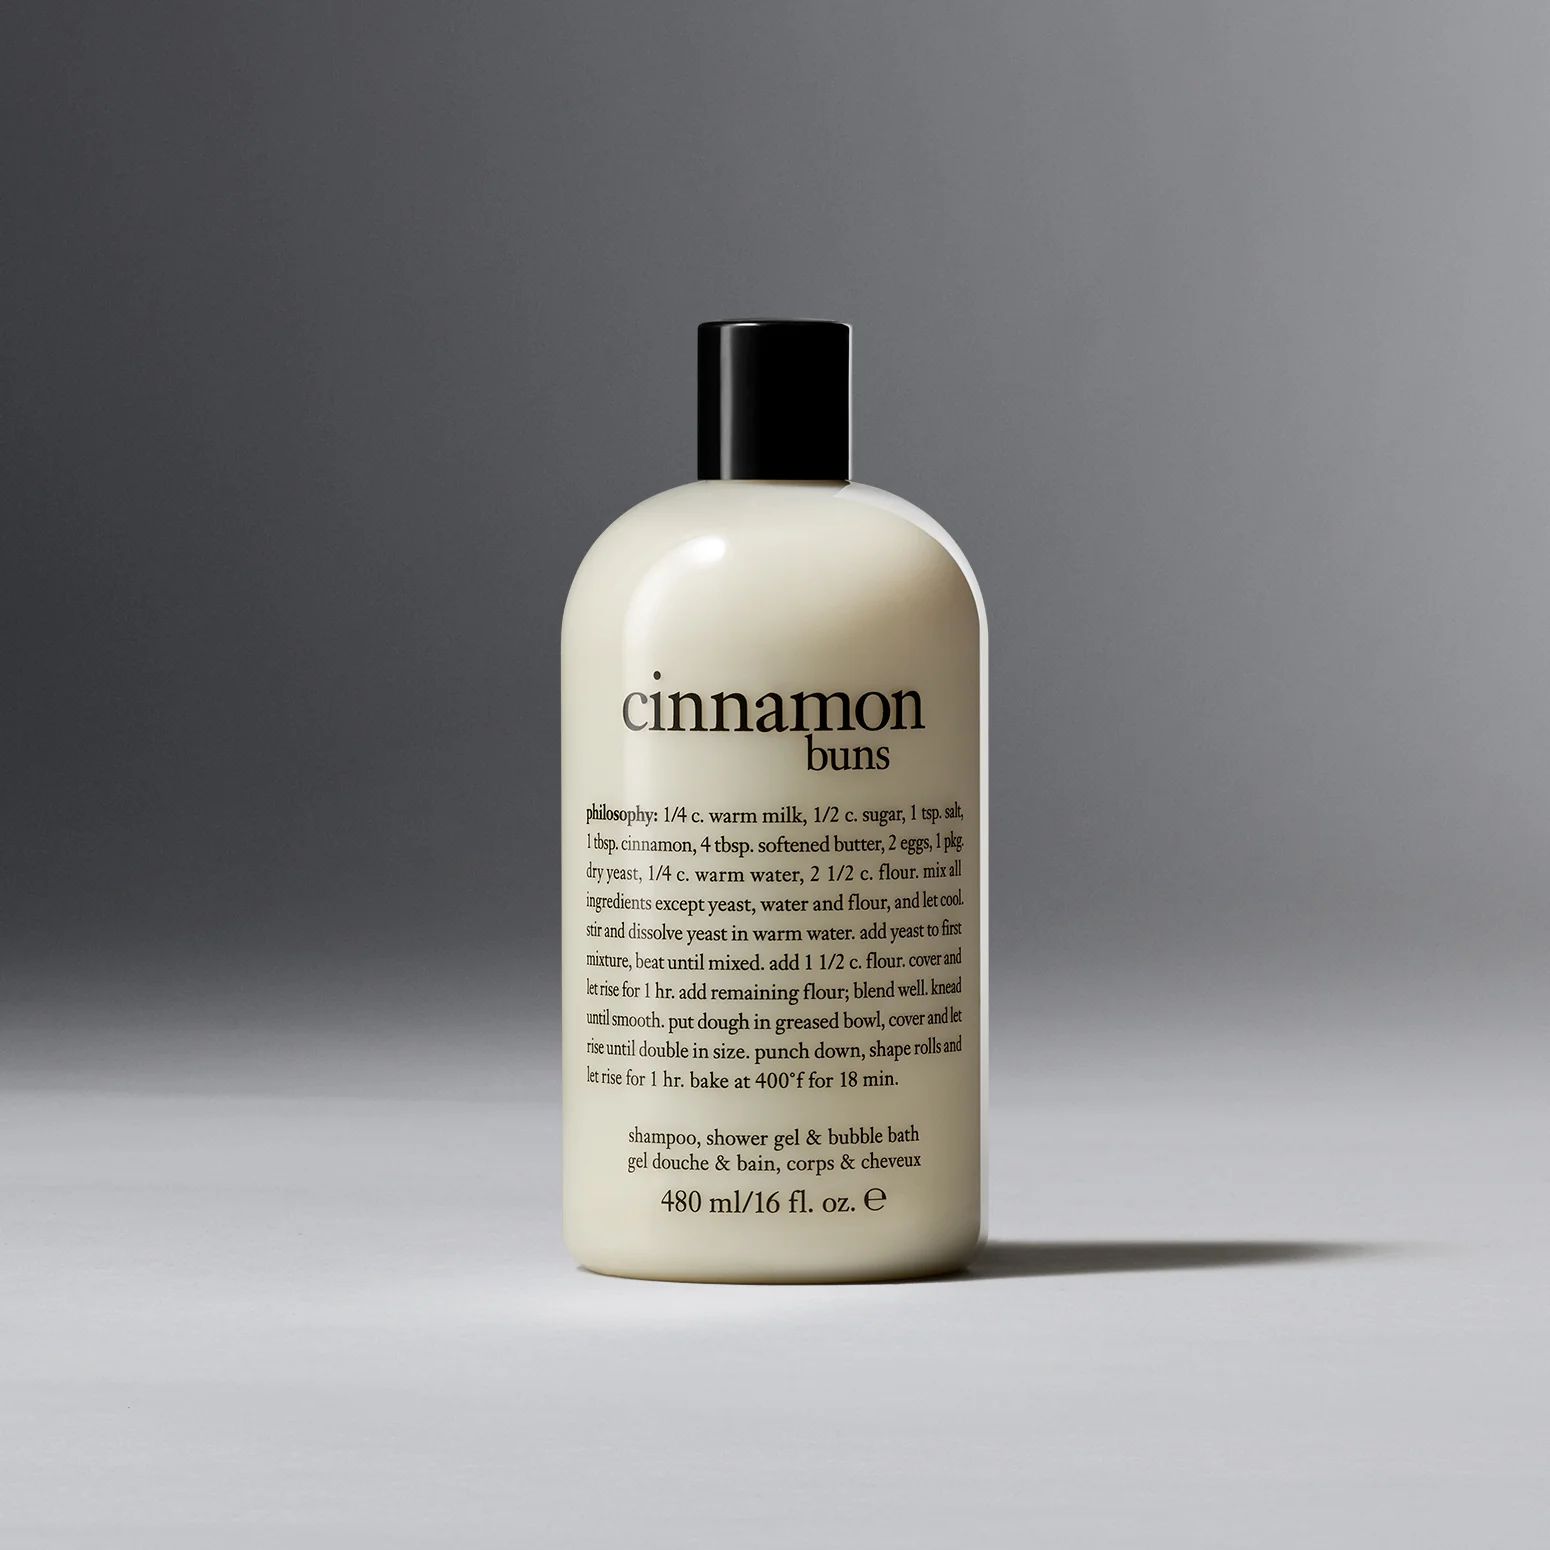 cinnamon buns shampoo, shower gel & bubble bath | Philosophy